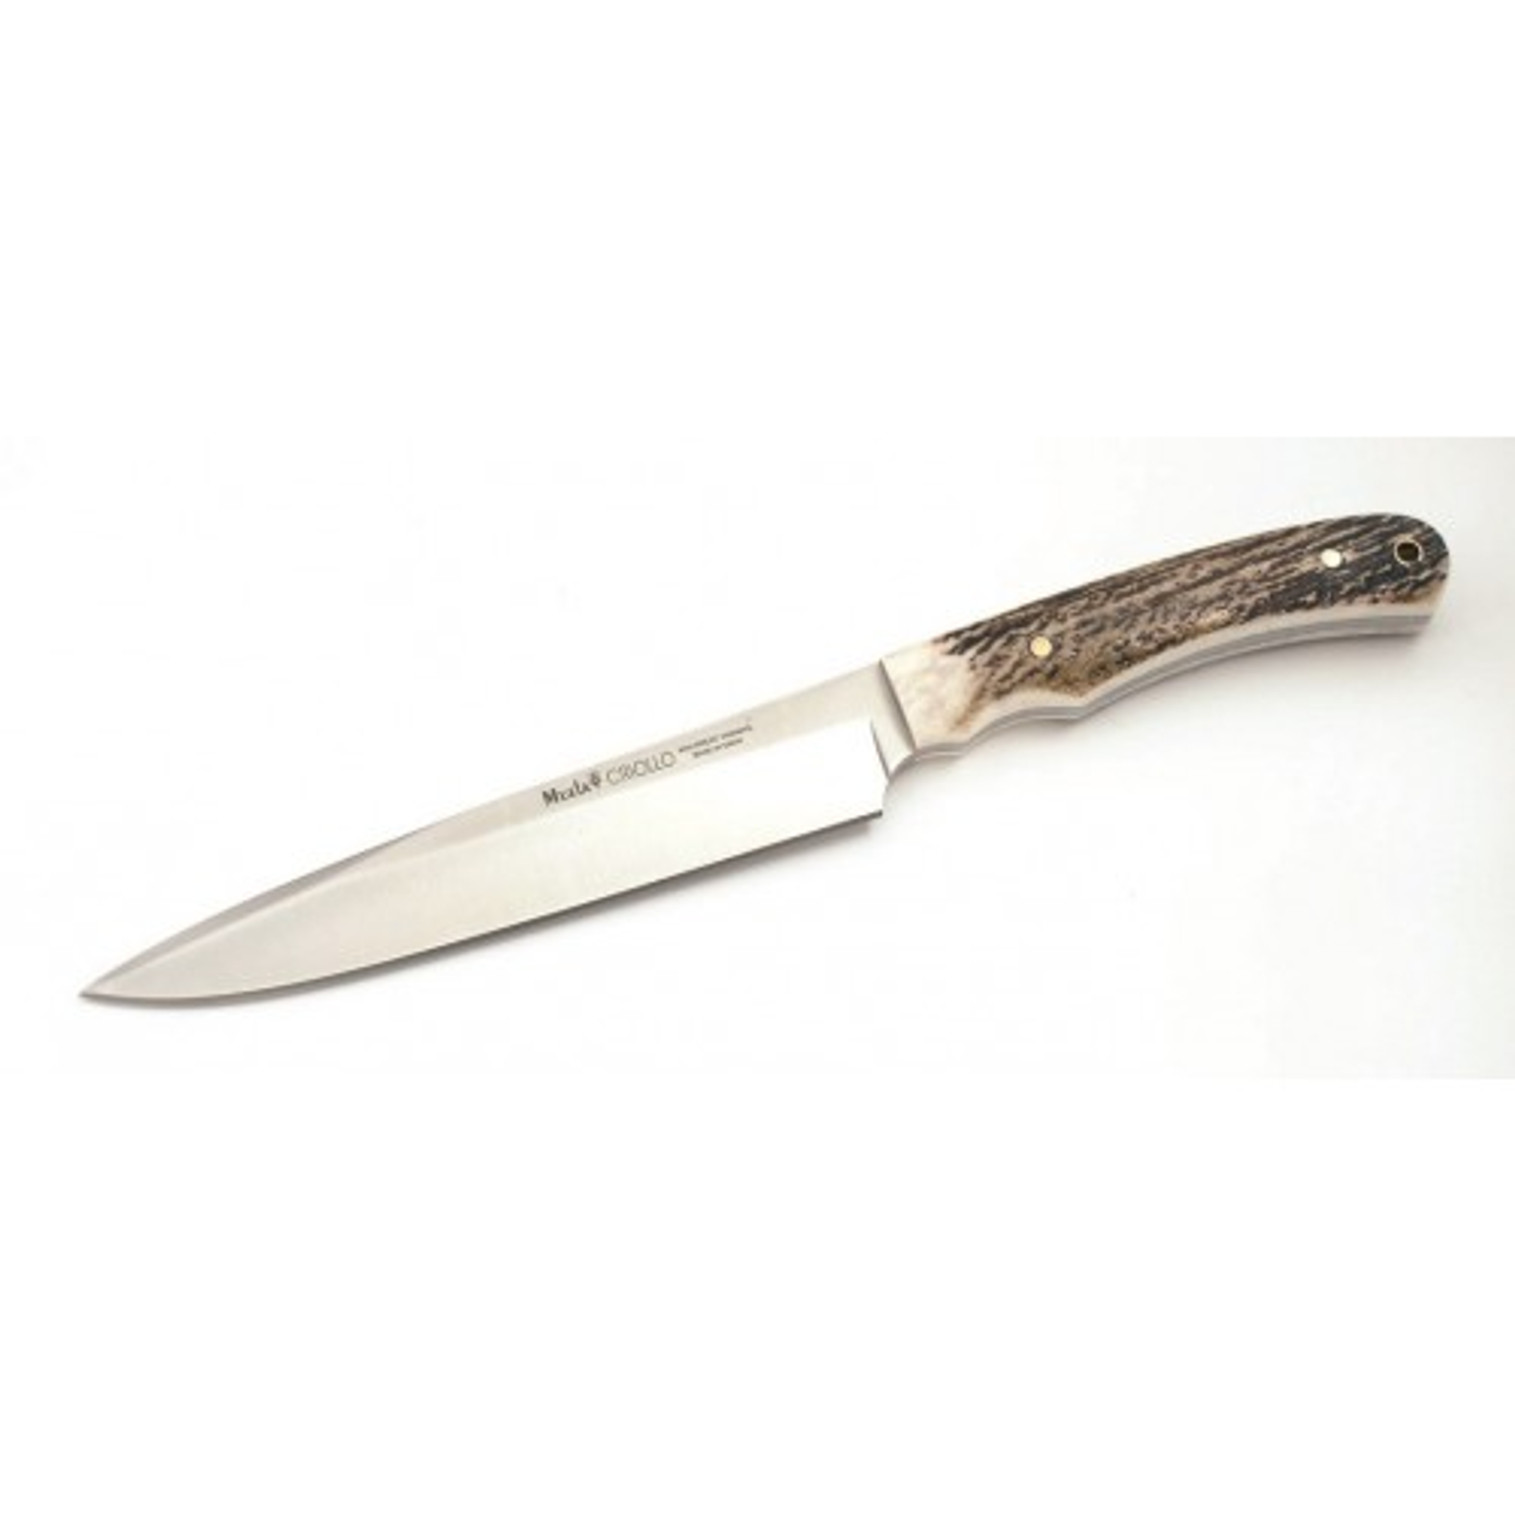 MUELA CRIOLLO-17A, X50CrMoV15, 6-3/4" Fixed Blade Hunting Knife, Deer Horn Handle